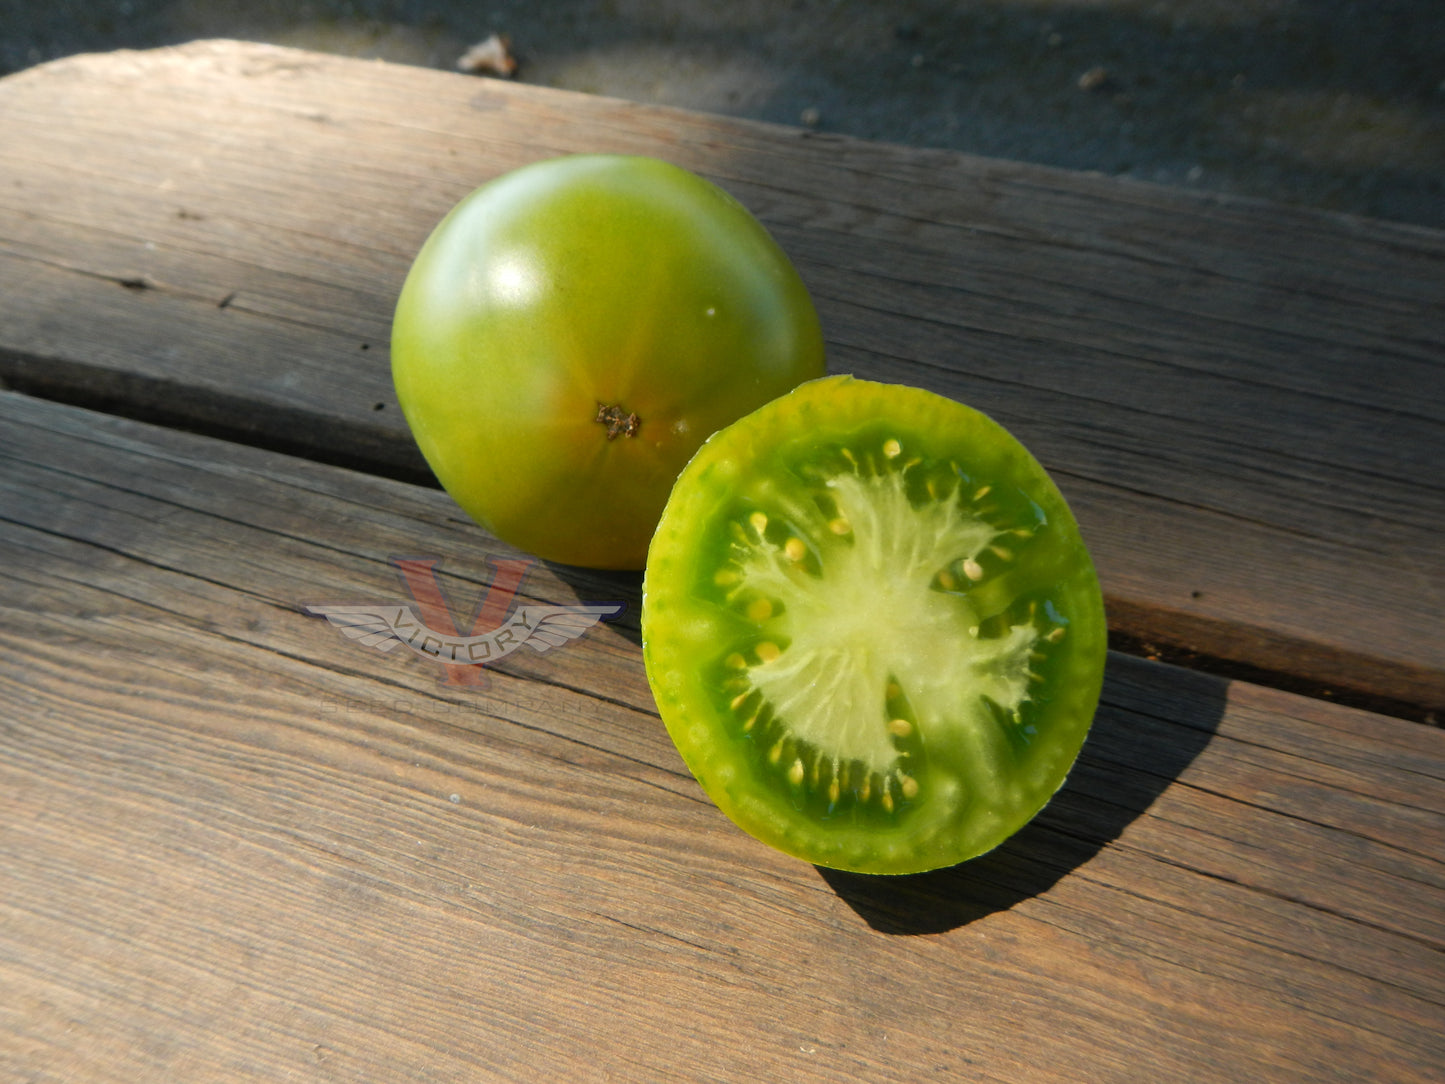 Dwarf Sara's Olalla Emerald Tomato